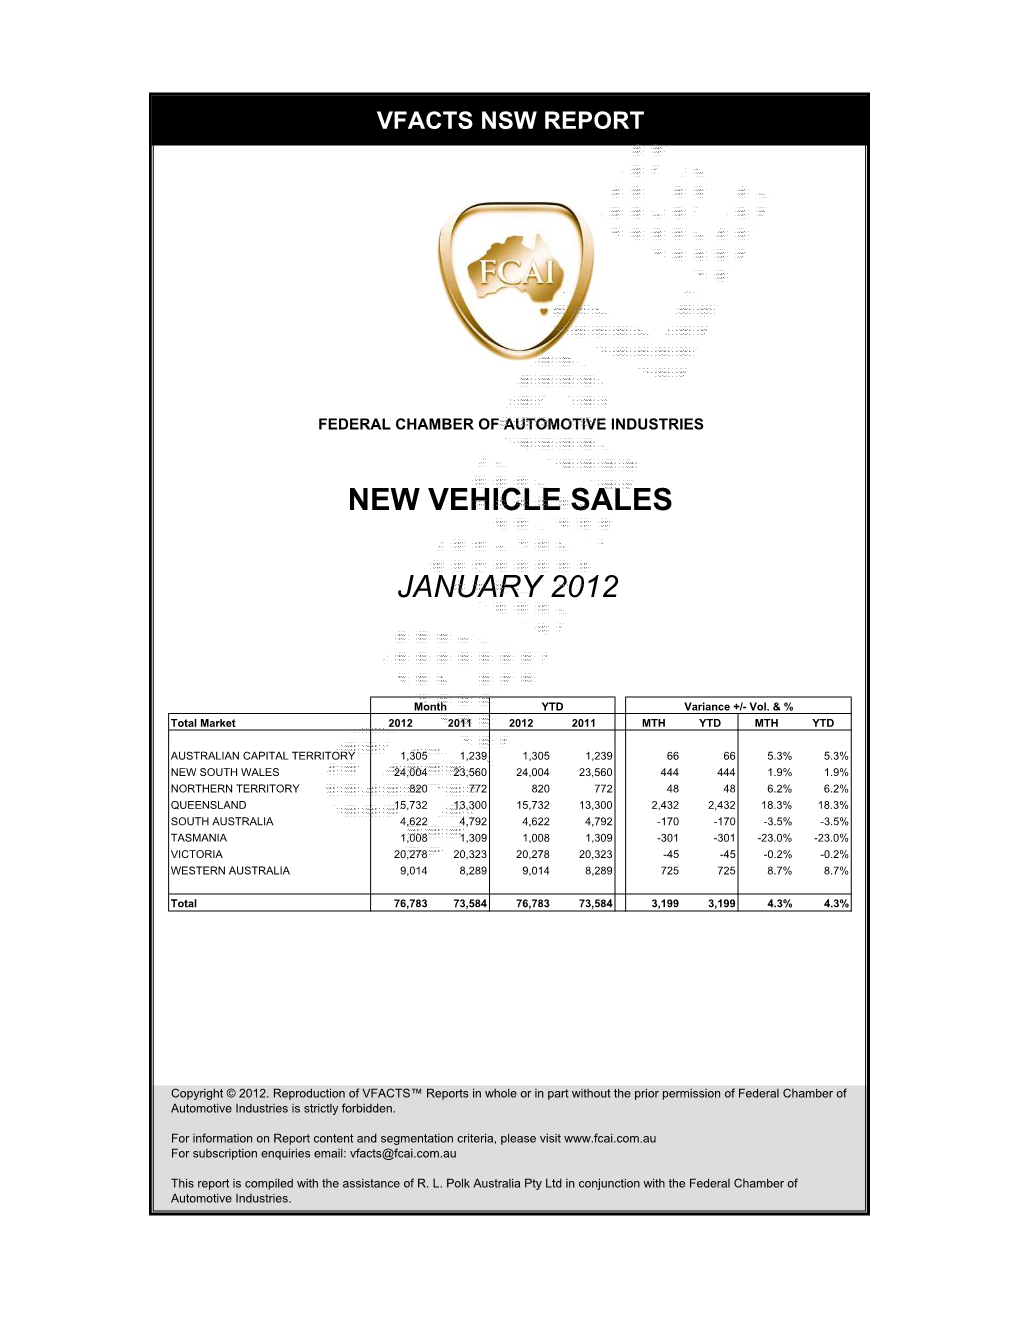 New Vehicle Sales January 2012